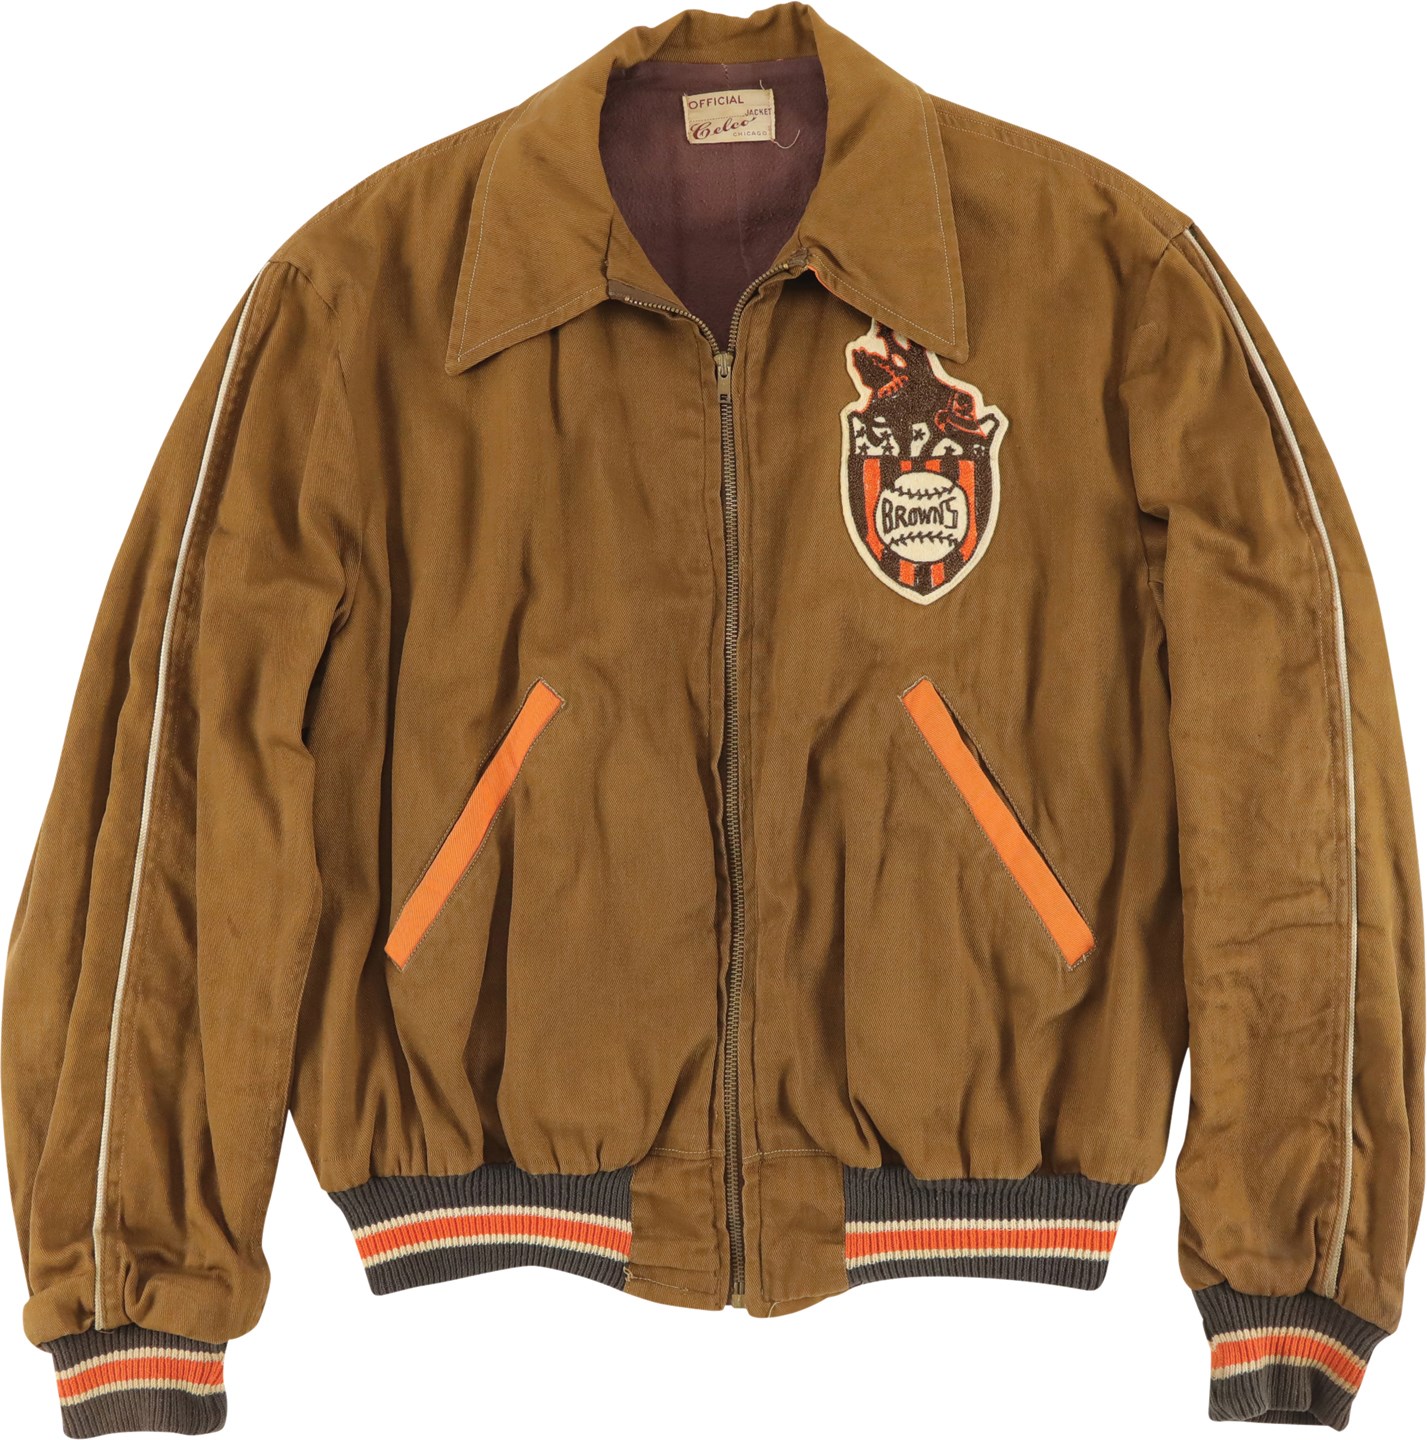 Baseball Equipment - Circa 1940s St. Louis Browns Team Jacket